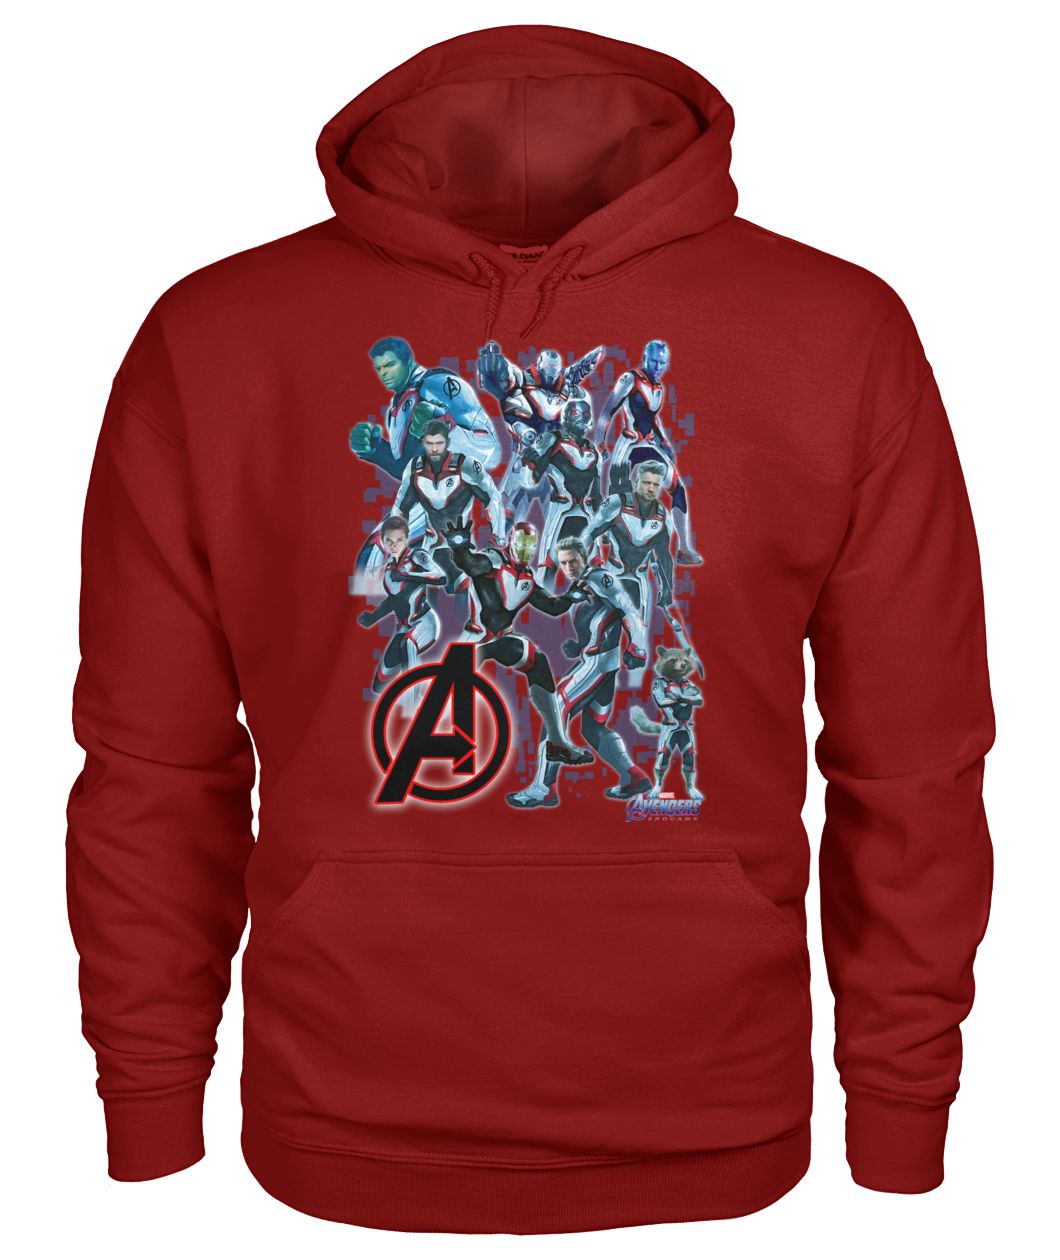 Marvel avengers endgame movie gildan hoodie